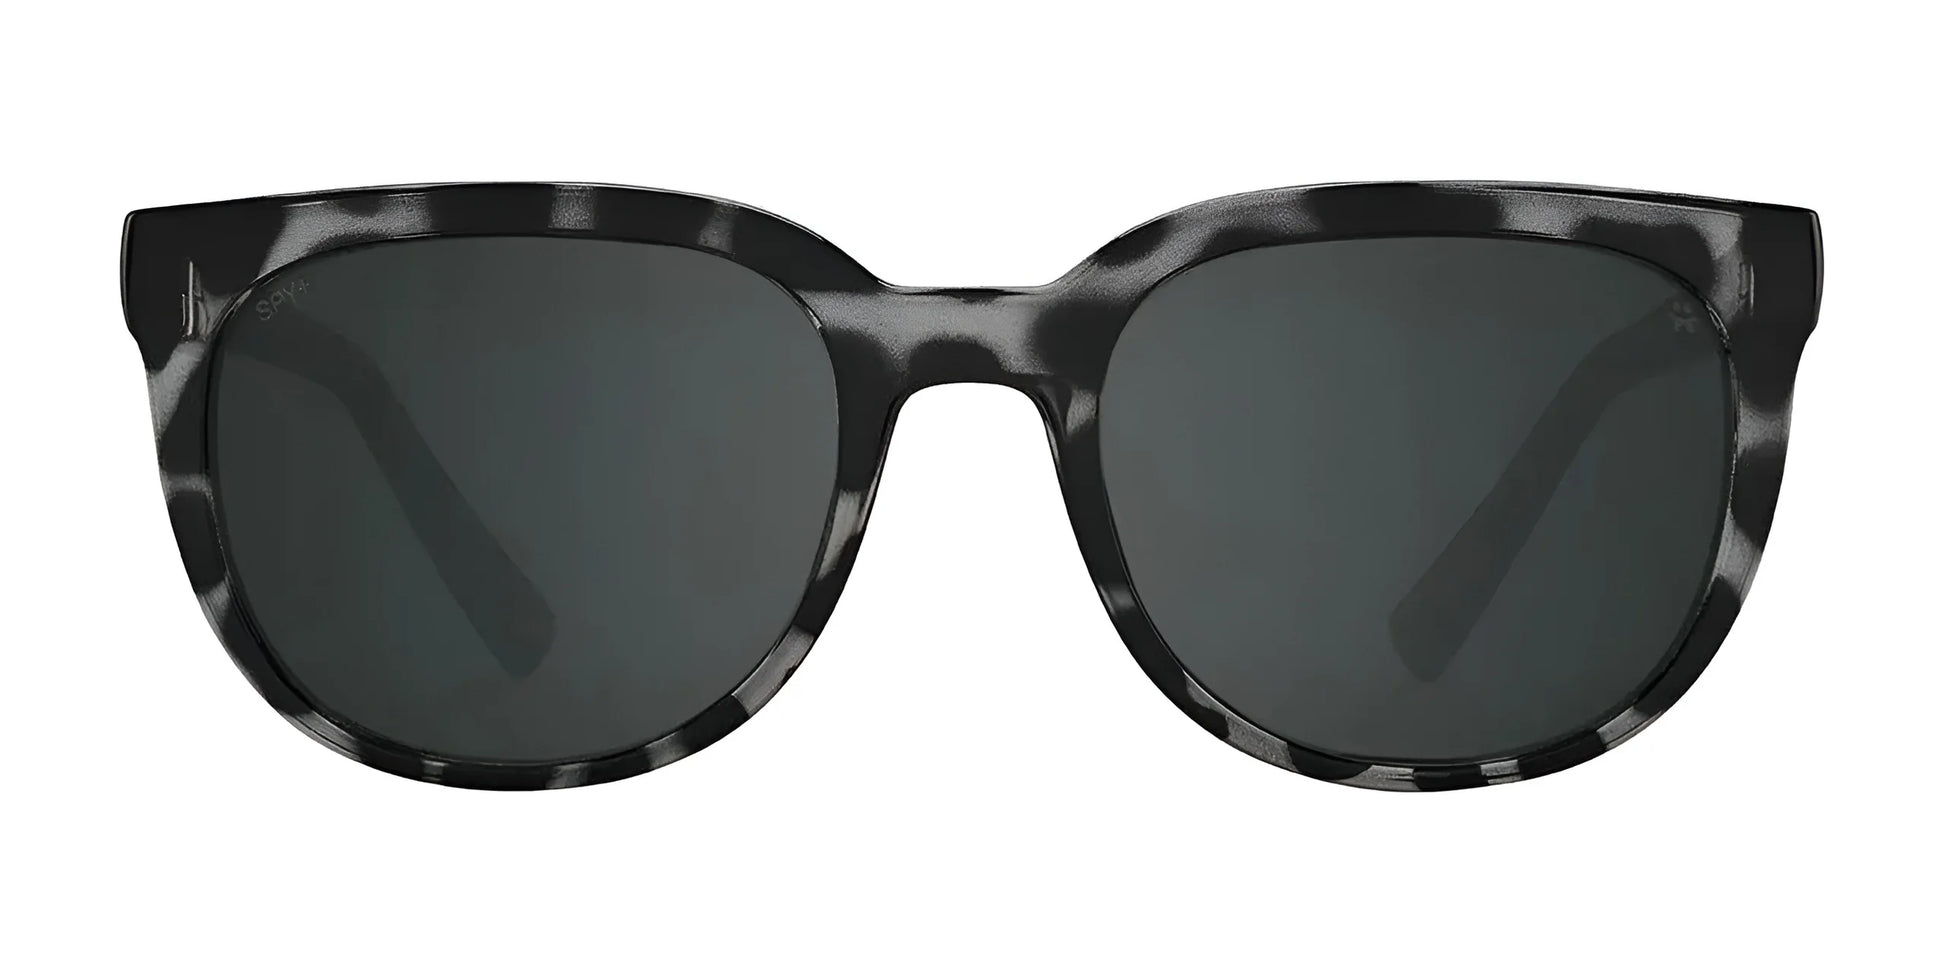 SPY BEWILDER Sunglasses Black Marble Tort / Happy Gray Green Black Mirror